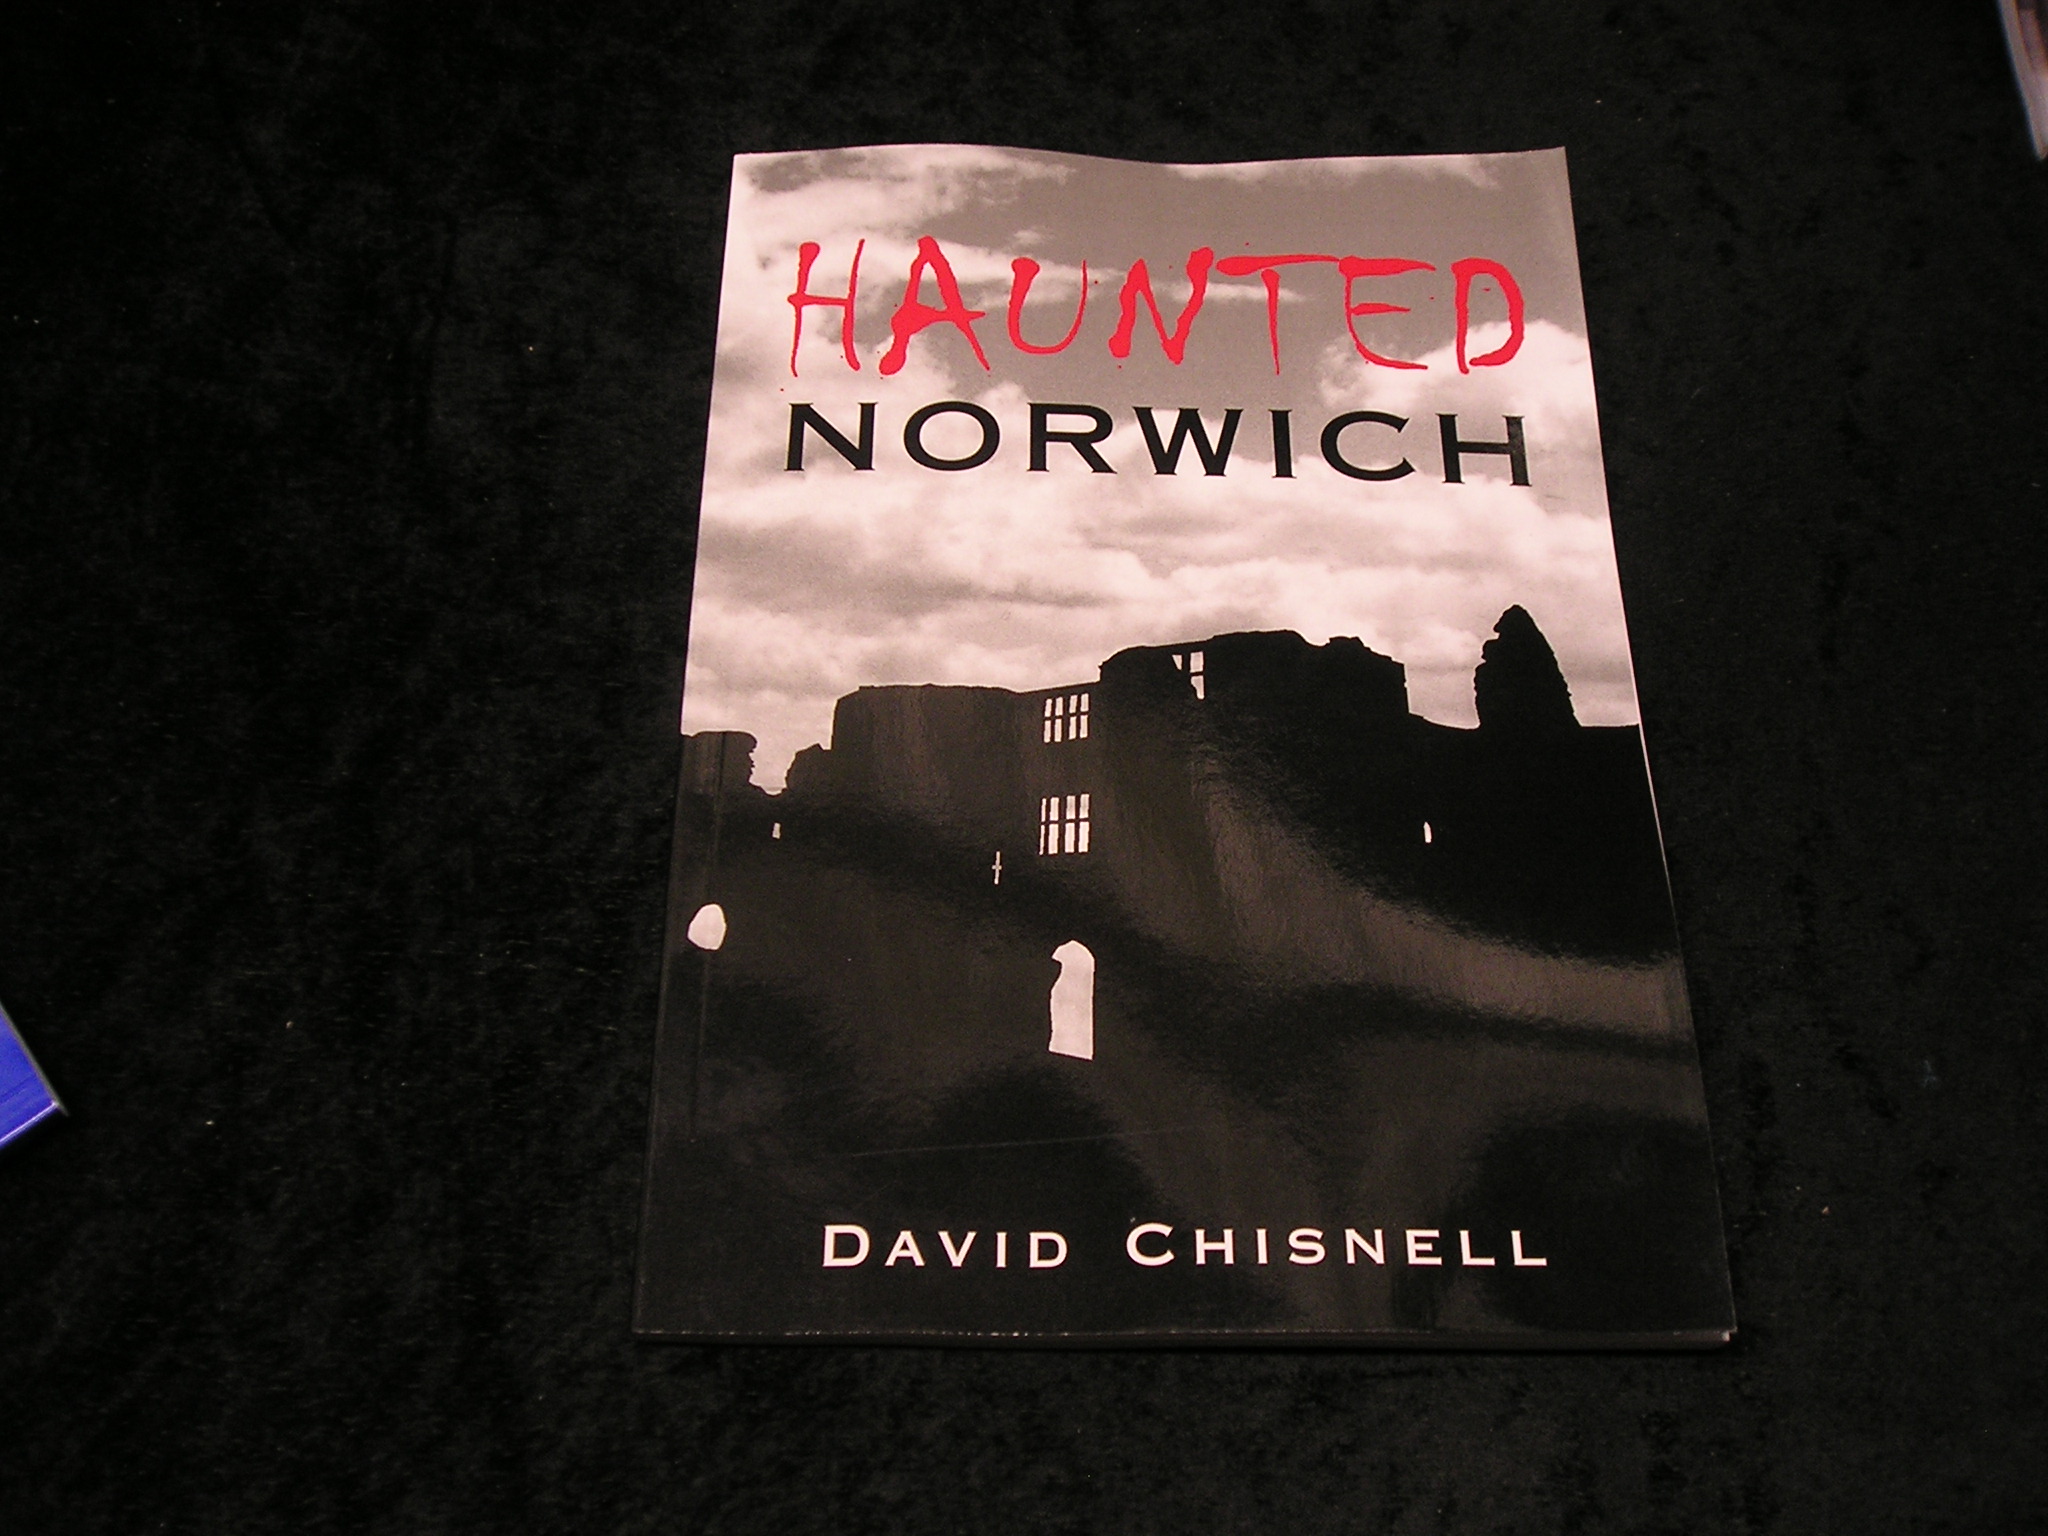 Haunted Norwich